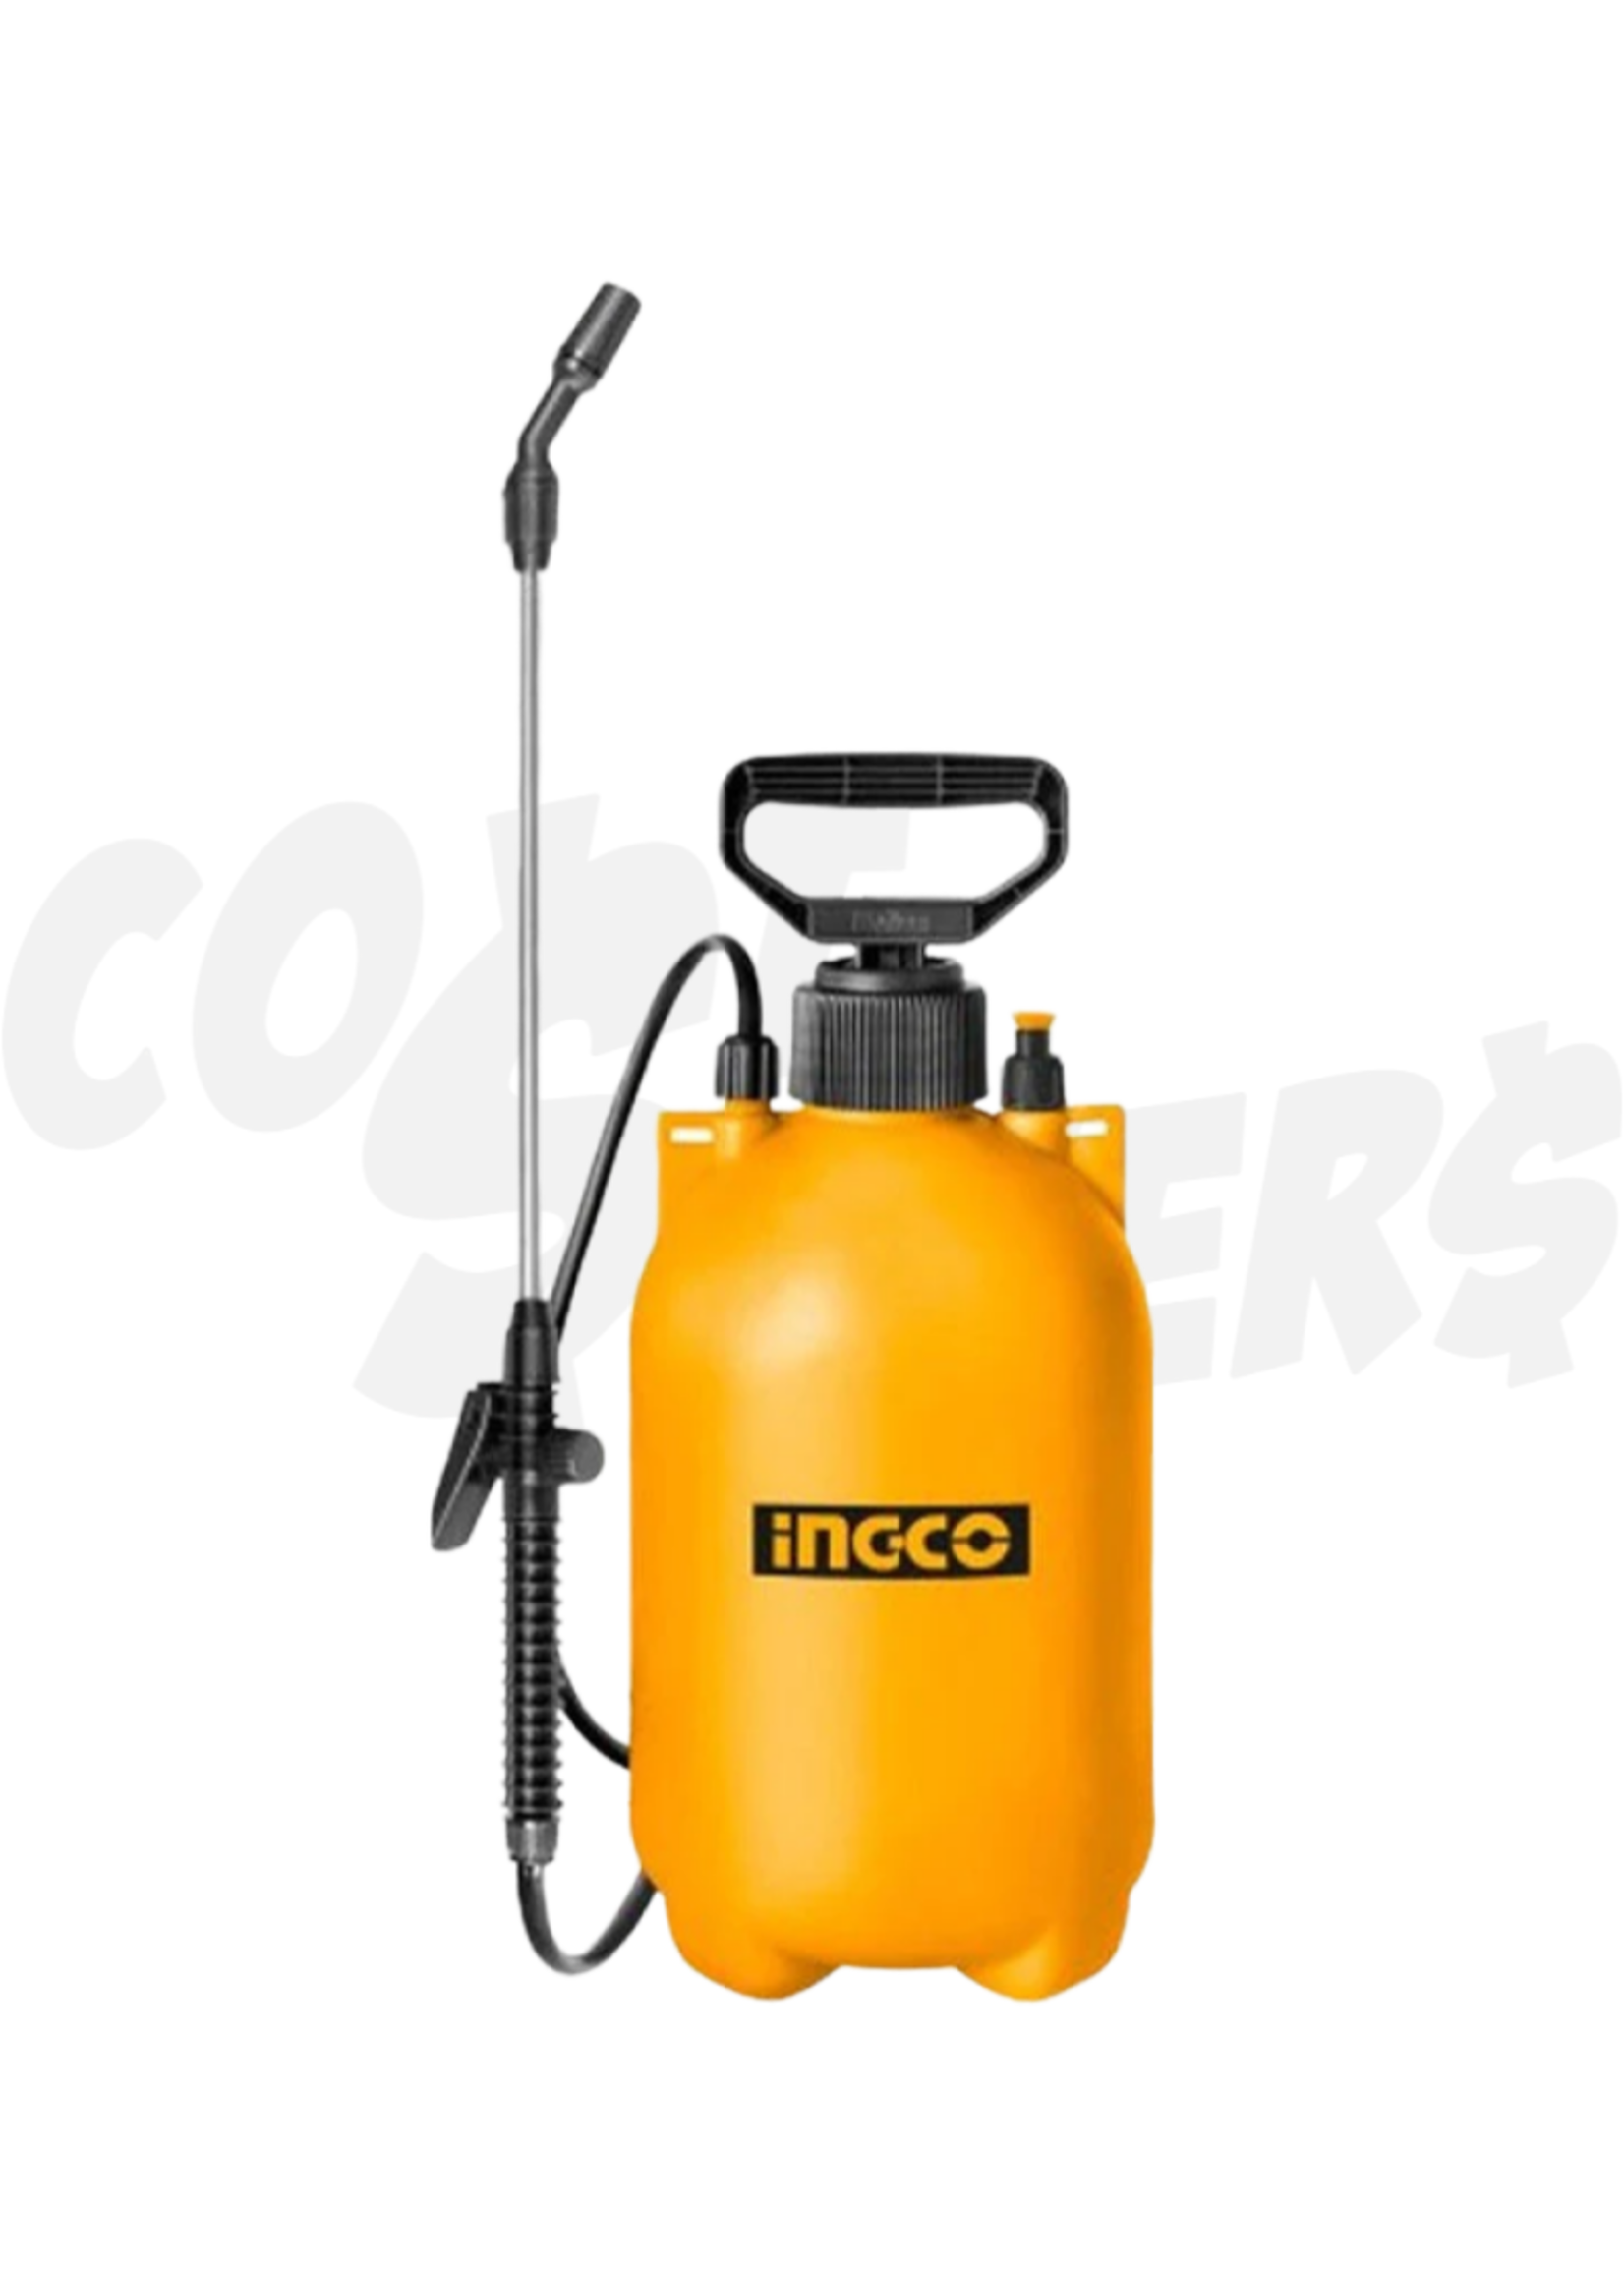 Ingco Ingco 5L Pressure Sprayer